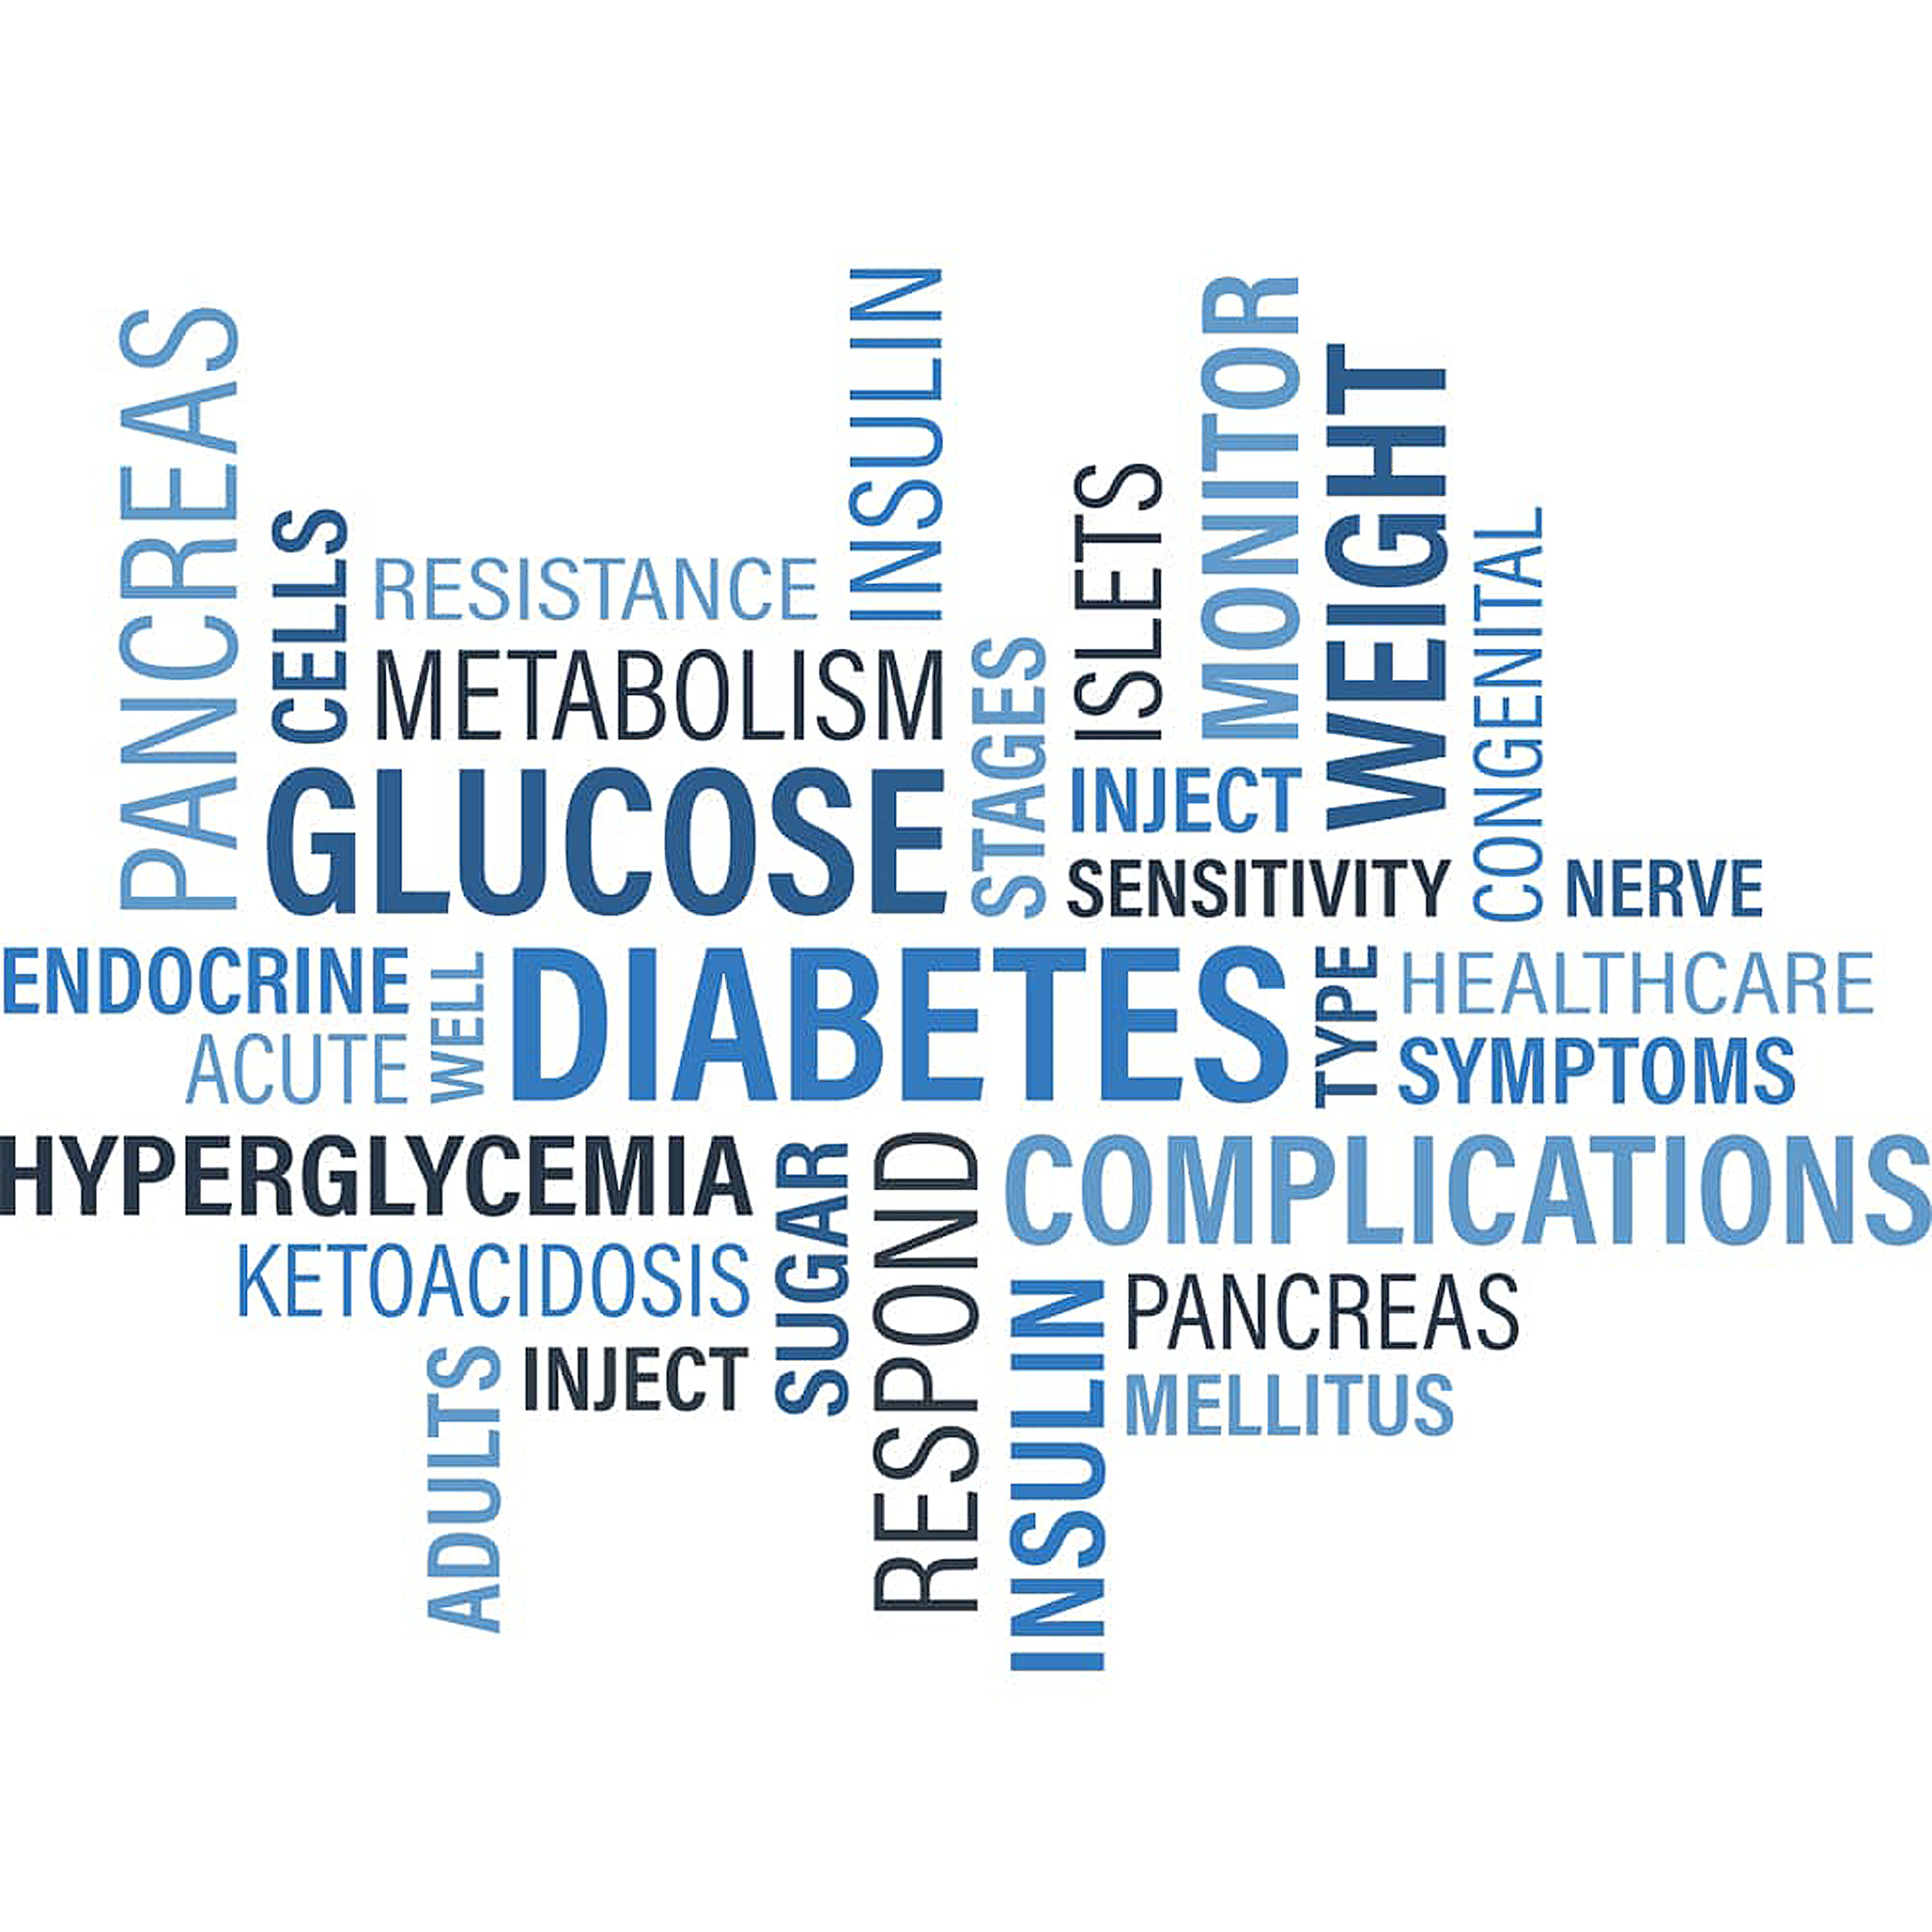 Diabete Iperglicemia insulinica